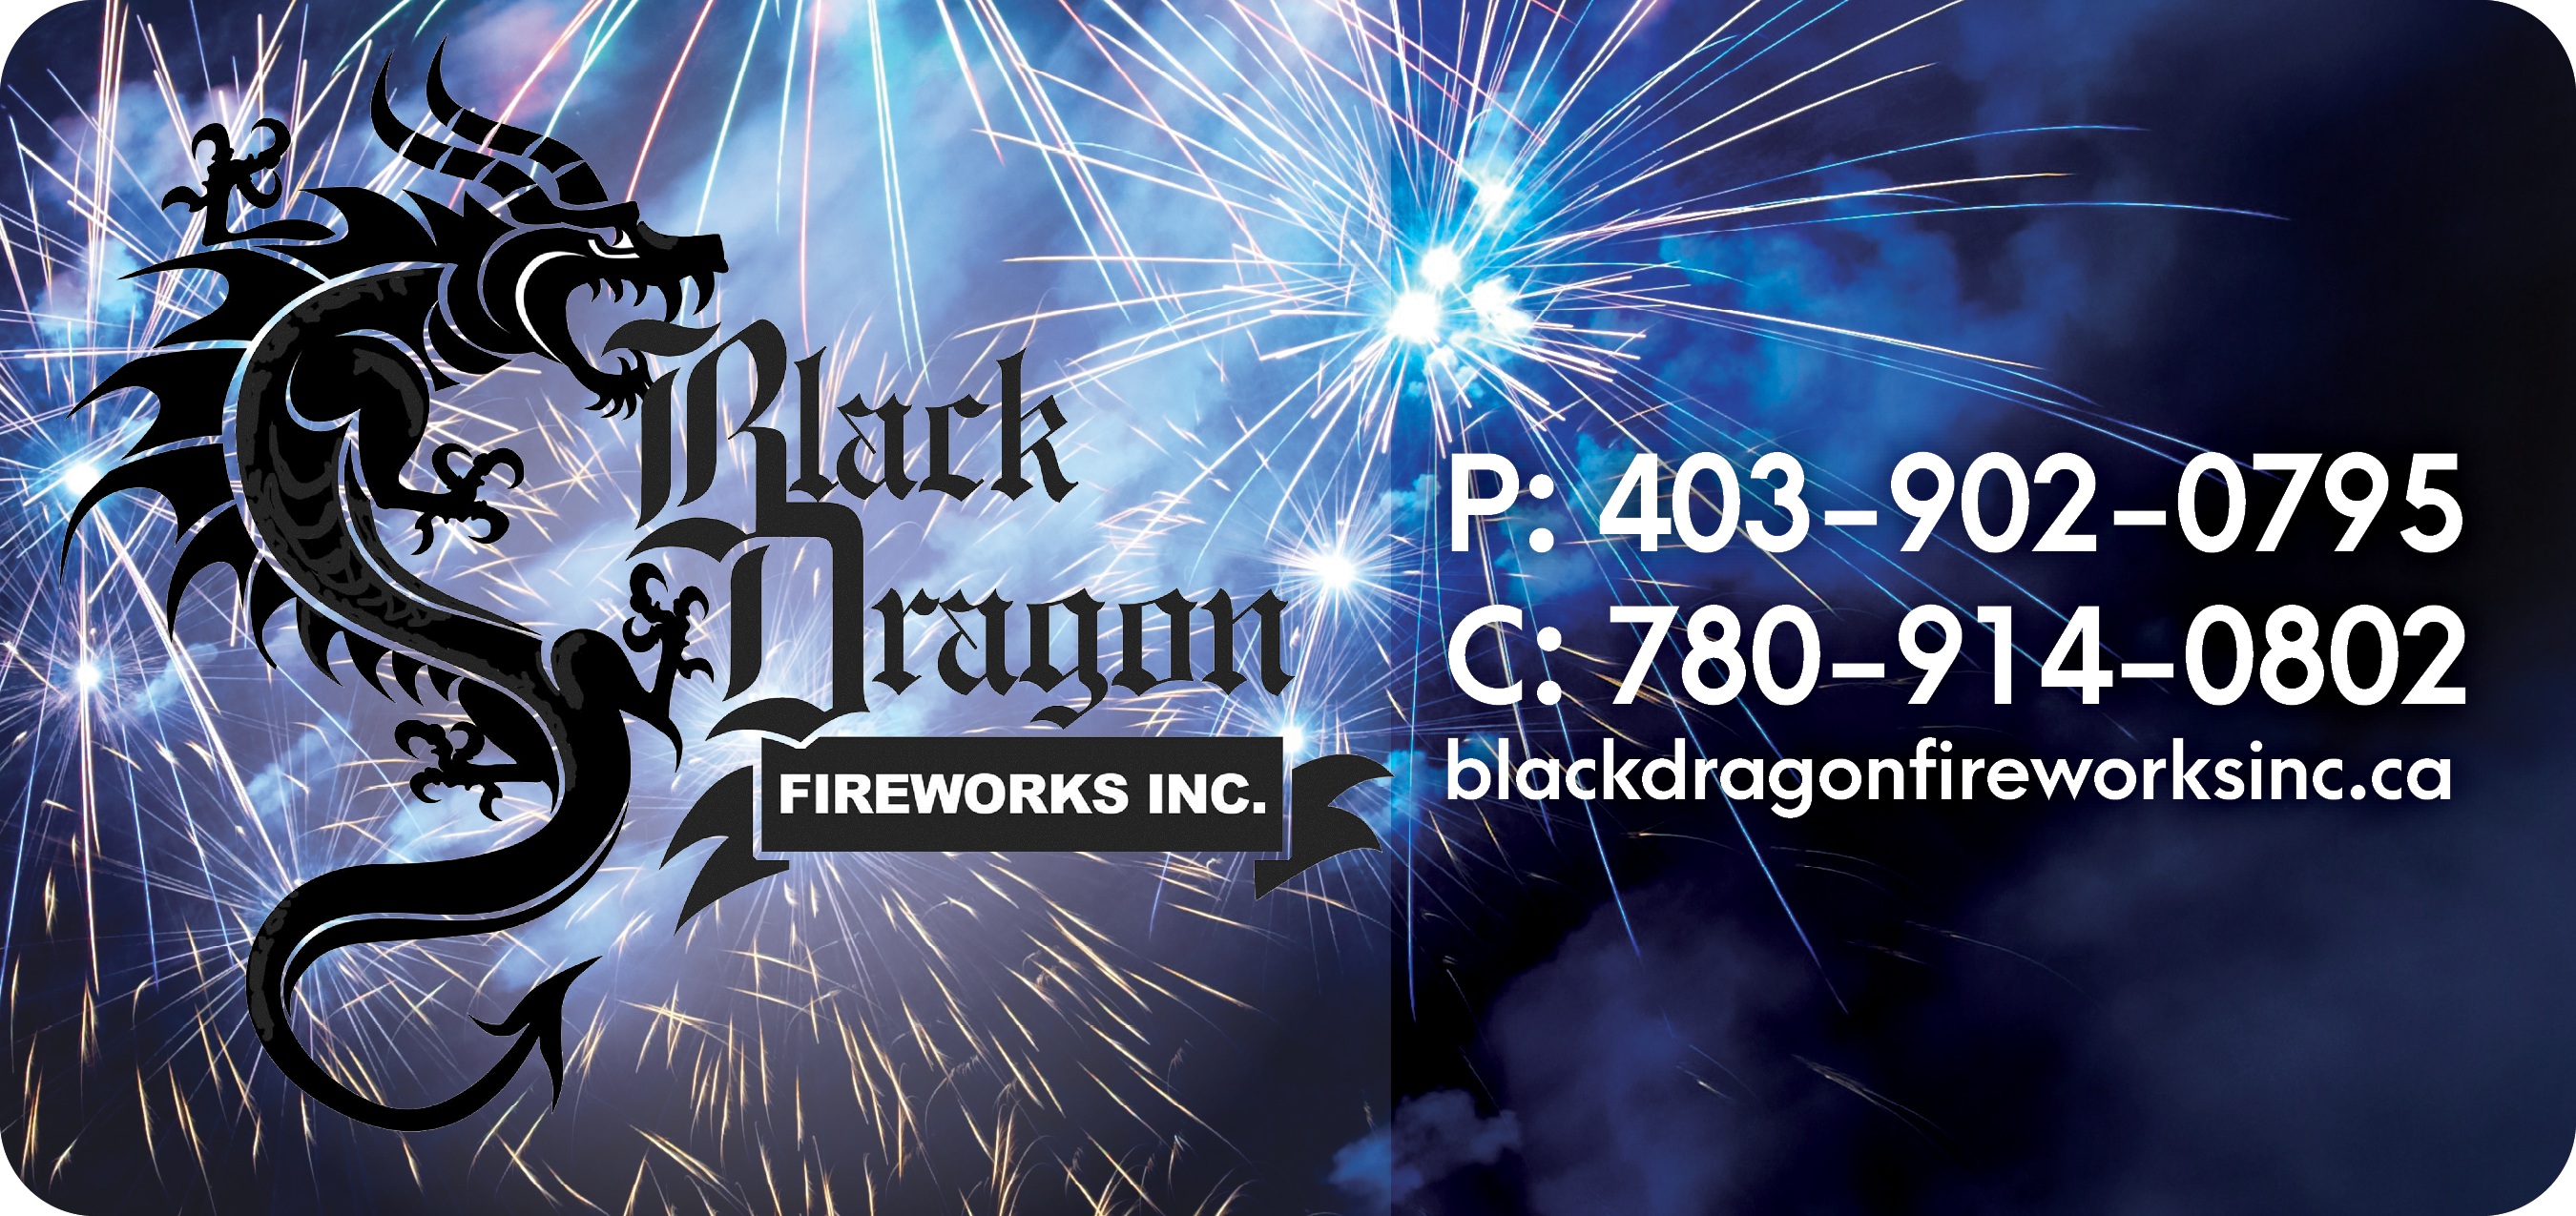 Black Dragon Fireworks Inc